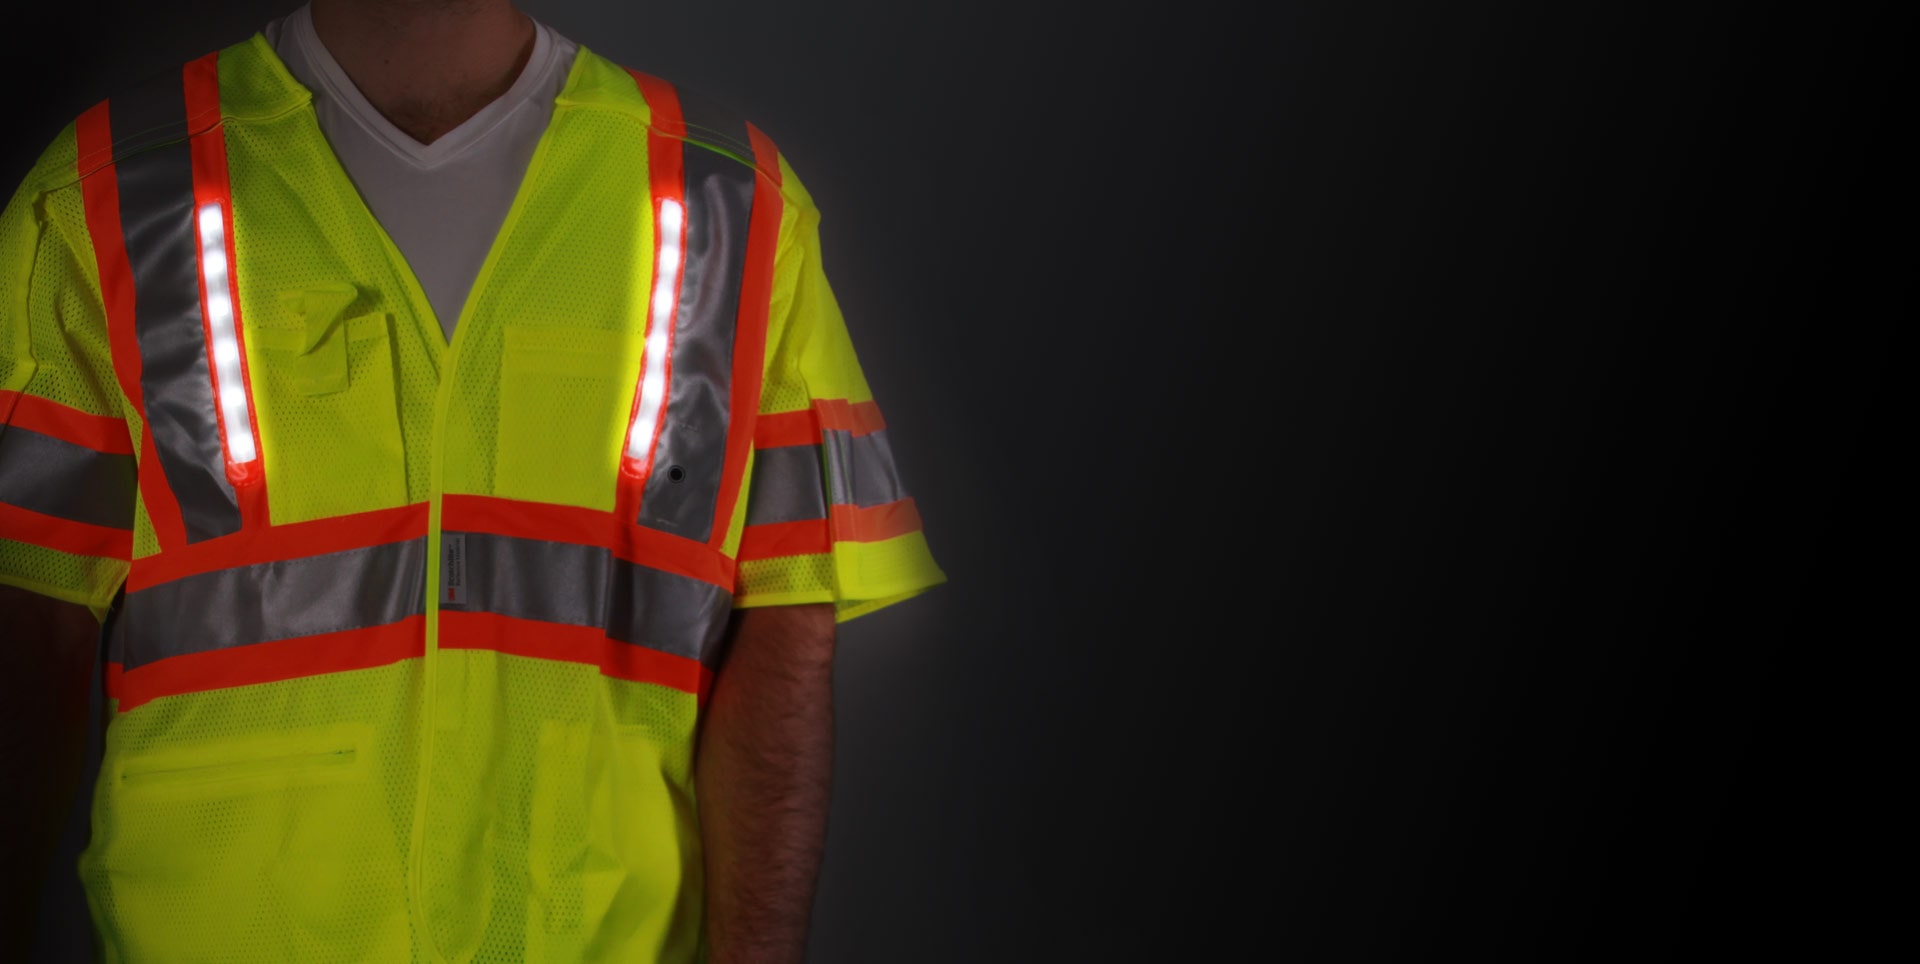 LED Safety Vest